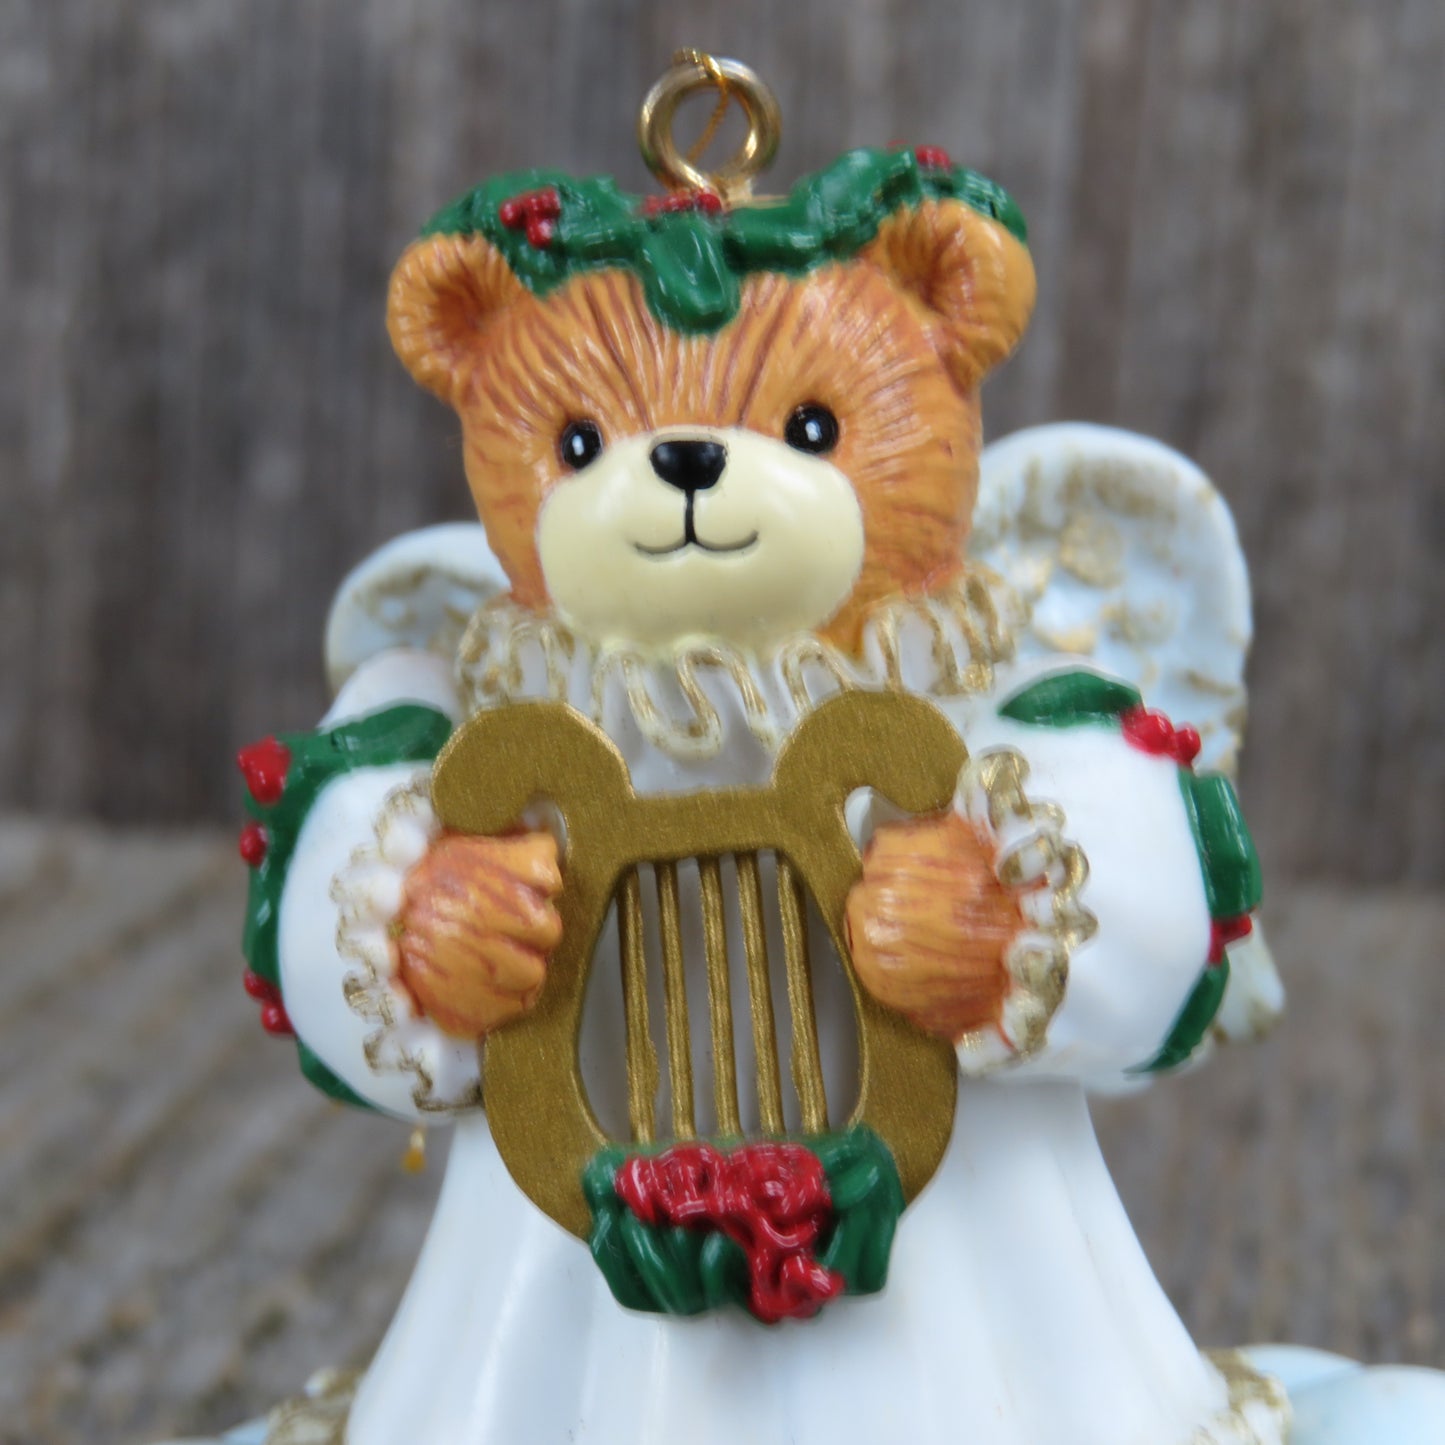 Vintage Teddy Bear Angel on a Cloud Ornament Christmas Figurine 1987 Enesco Lucy Rigg Harp Holiday Decor - At Grandma's Table